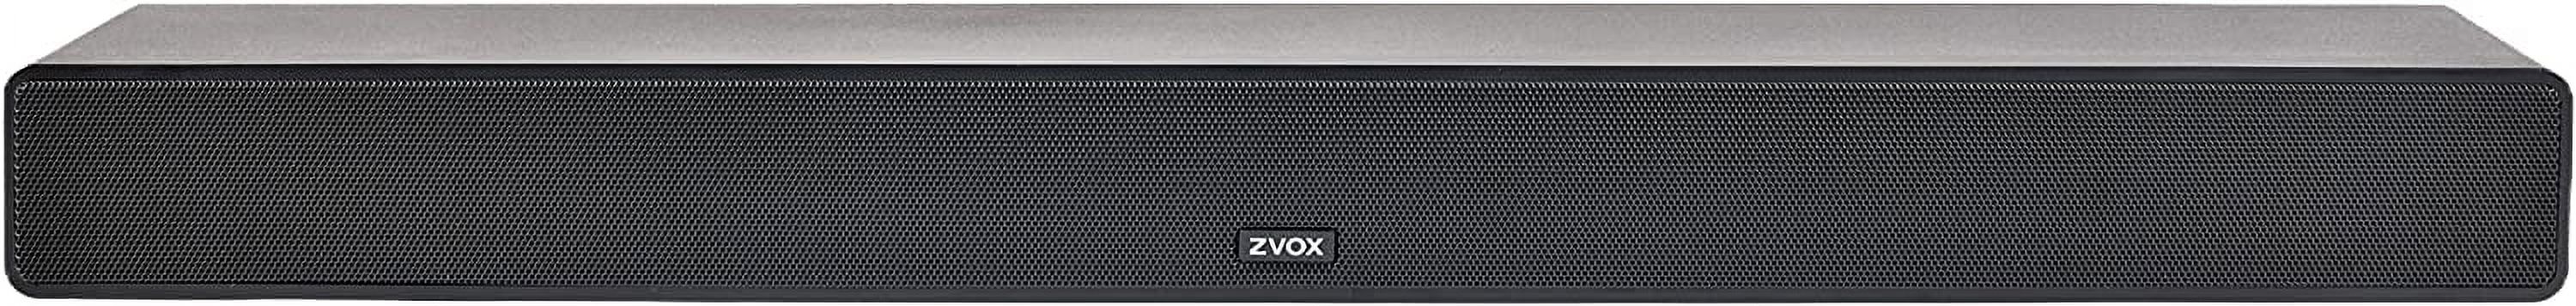 ZVOX AccuVoice AV355 Low-Profile Soundbar, Black - image 1 of 5